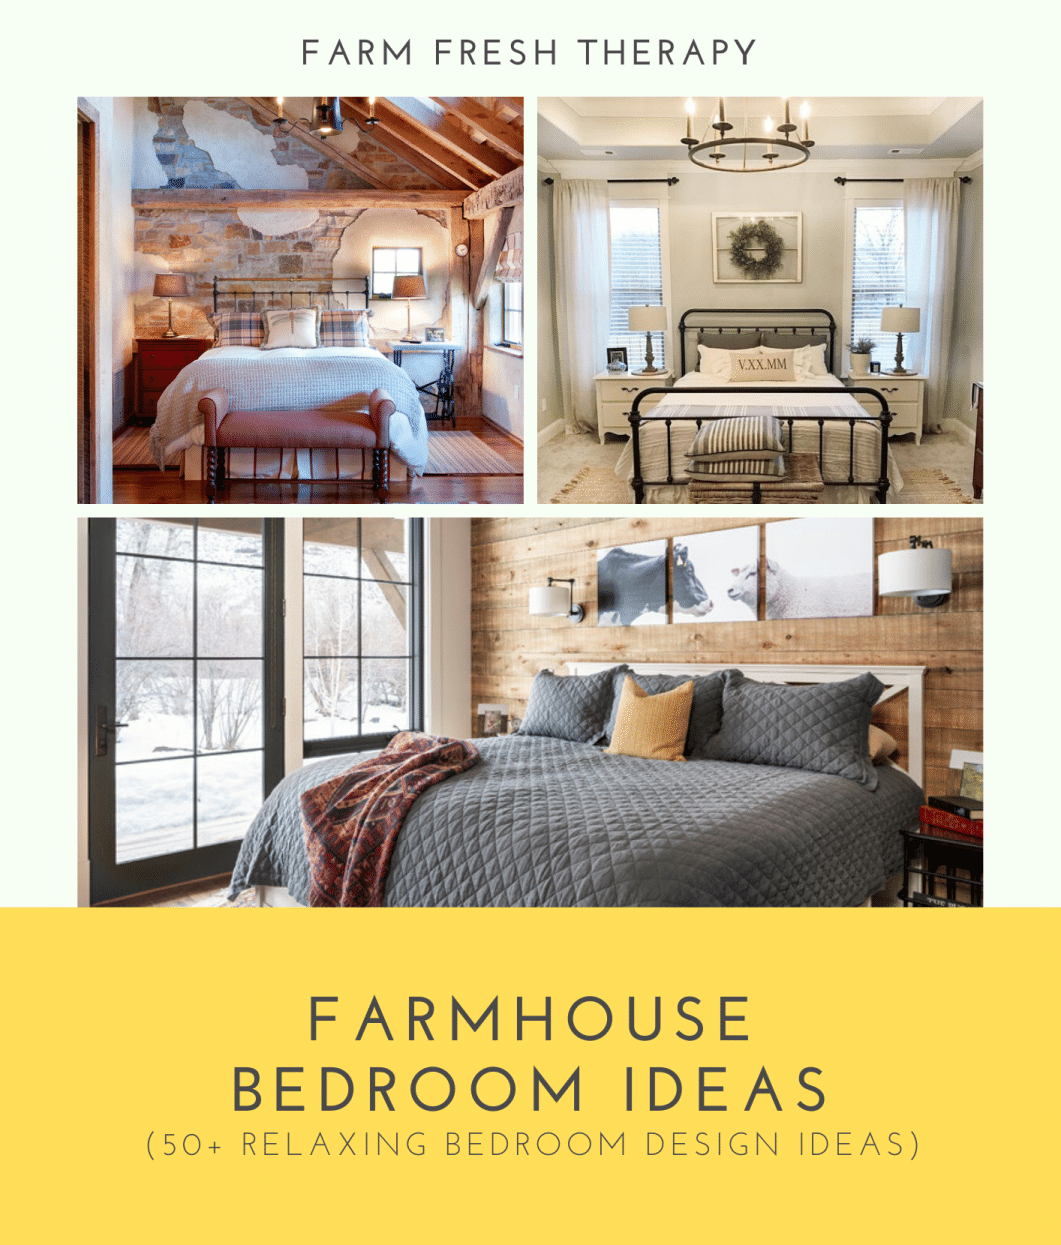 Farmhouse bedroom designs